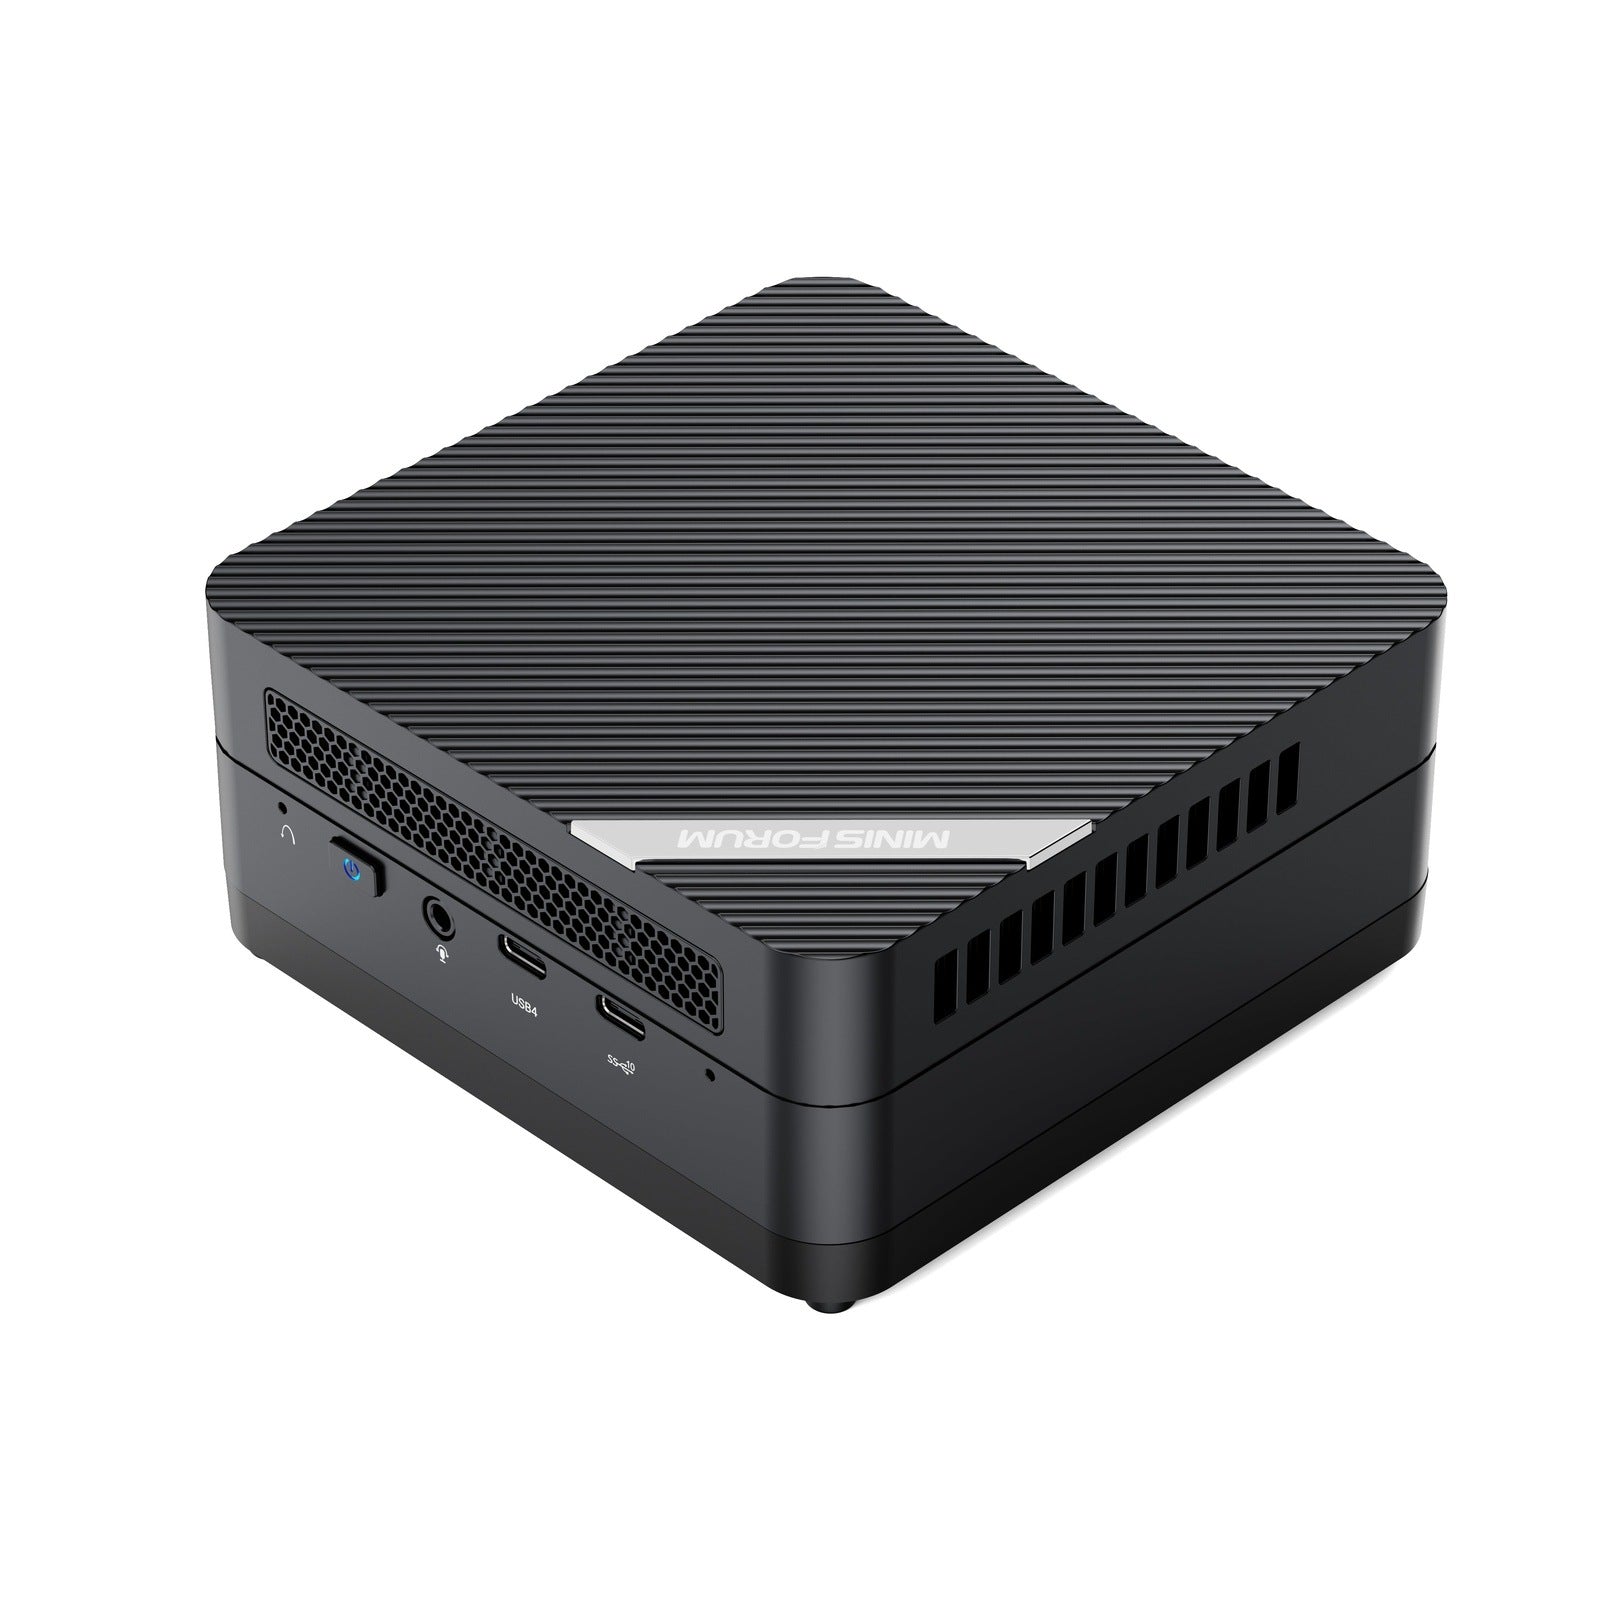 MINISFORUM Unveils the EM680 Ultra-Mini Desktop PC